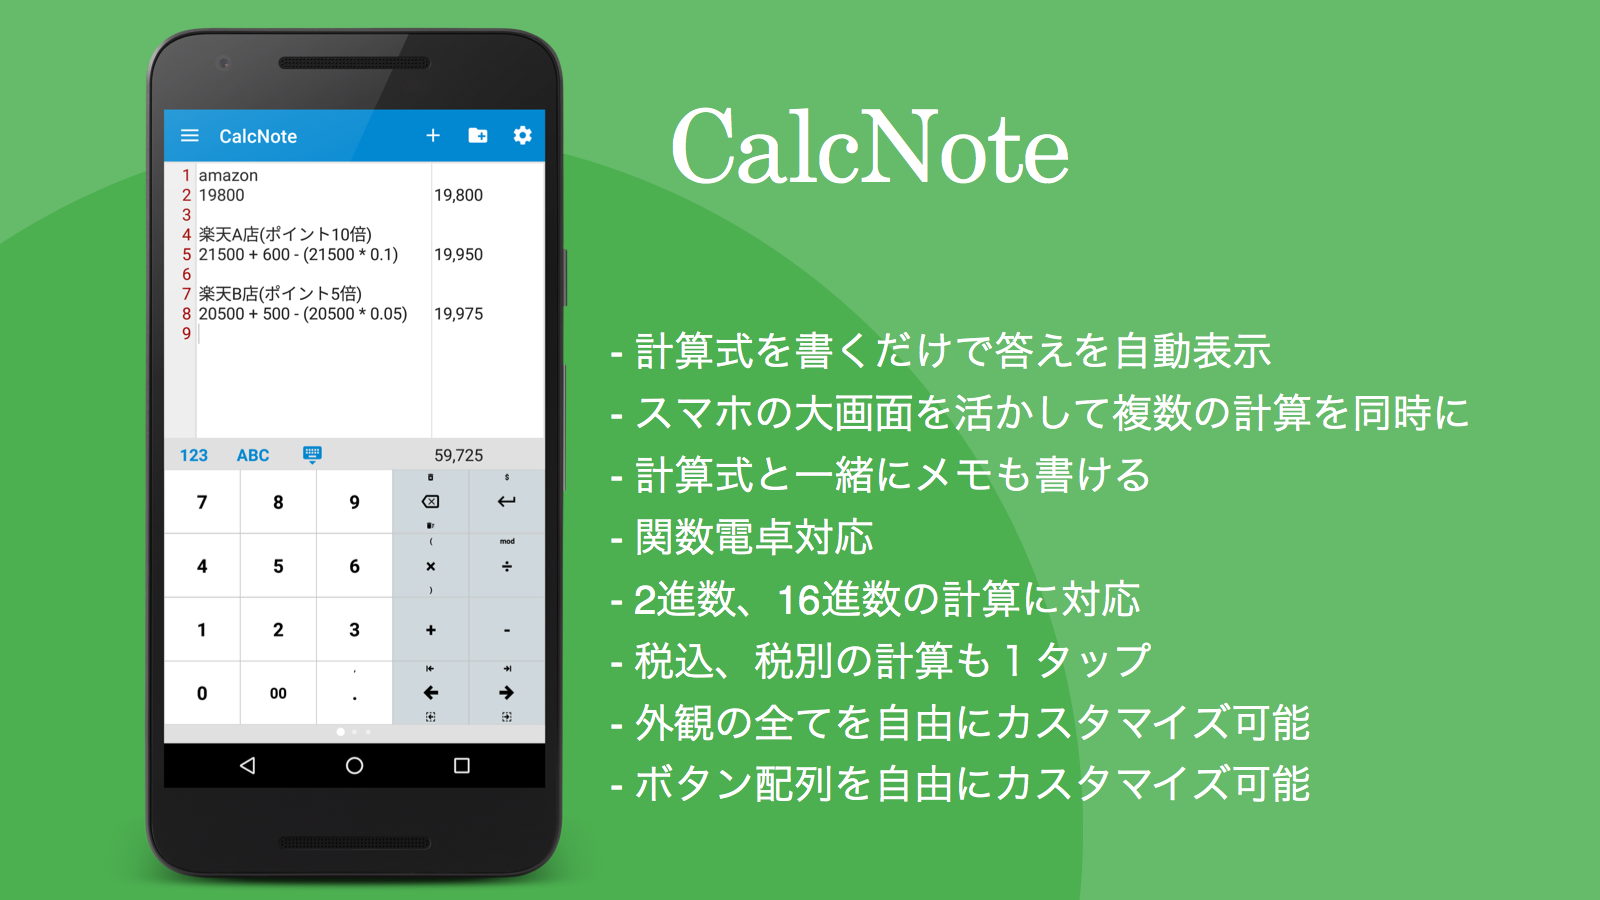 Android application CalcNote Pro - Math Calculator screenshort